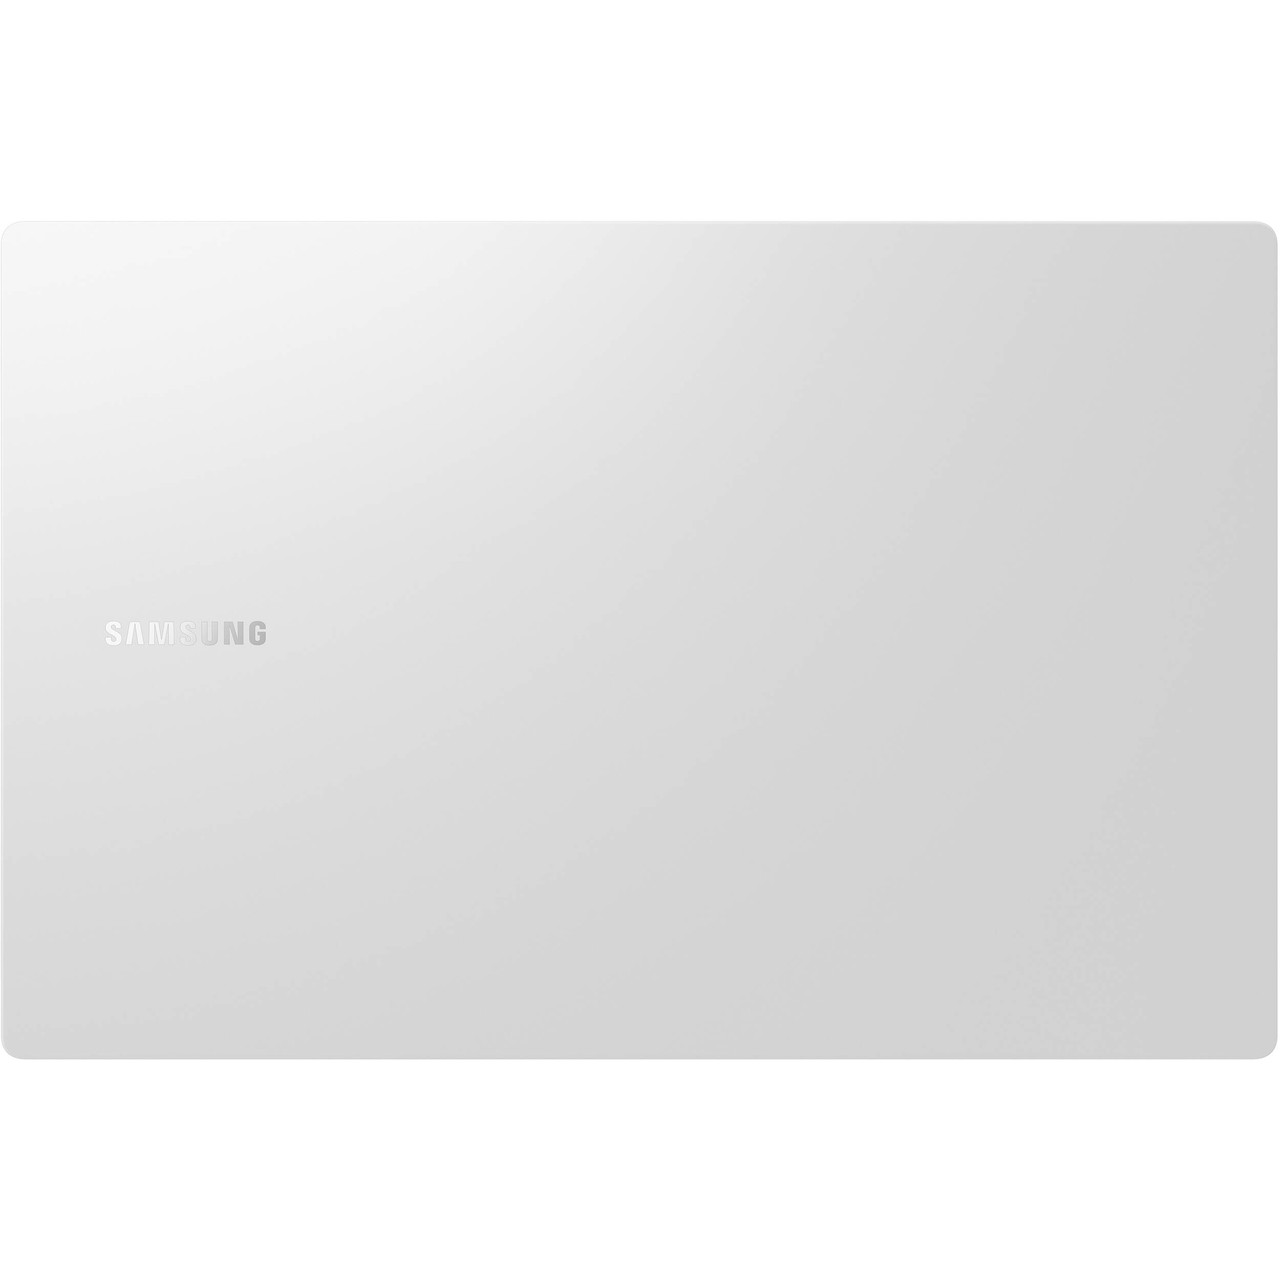 Samsung NP930XDB-KE1US-RB Book Pro 13.3" FHD i7-1165G7 8GB 512GB W10H, Silver - Certified Refurbished